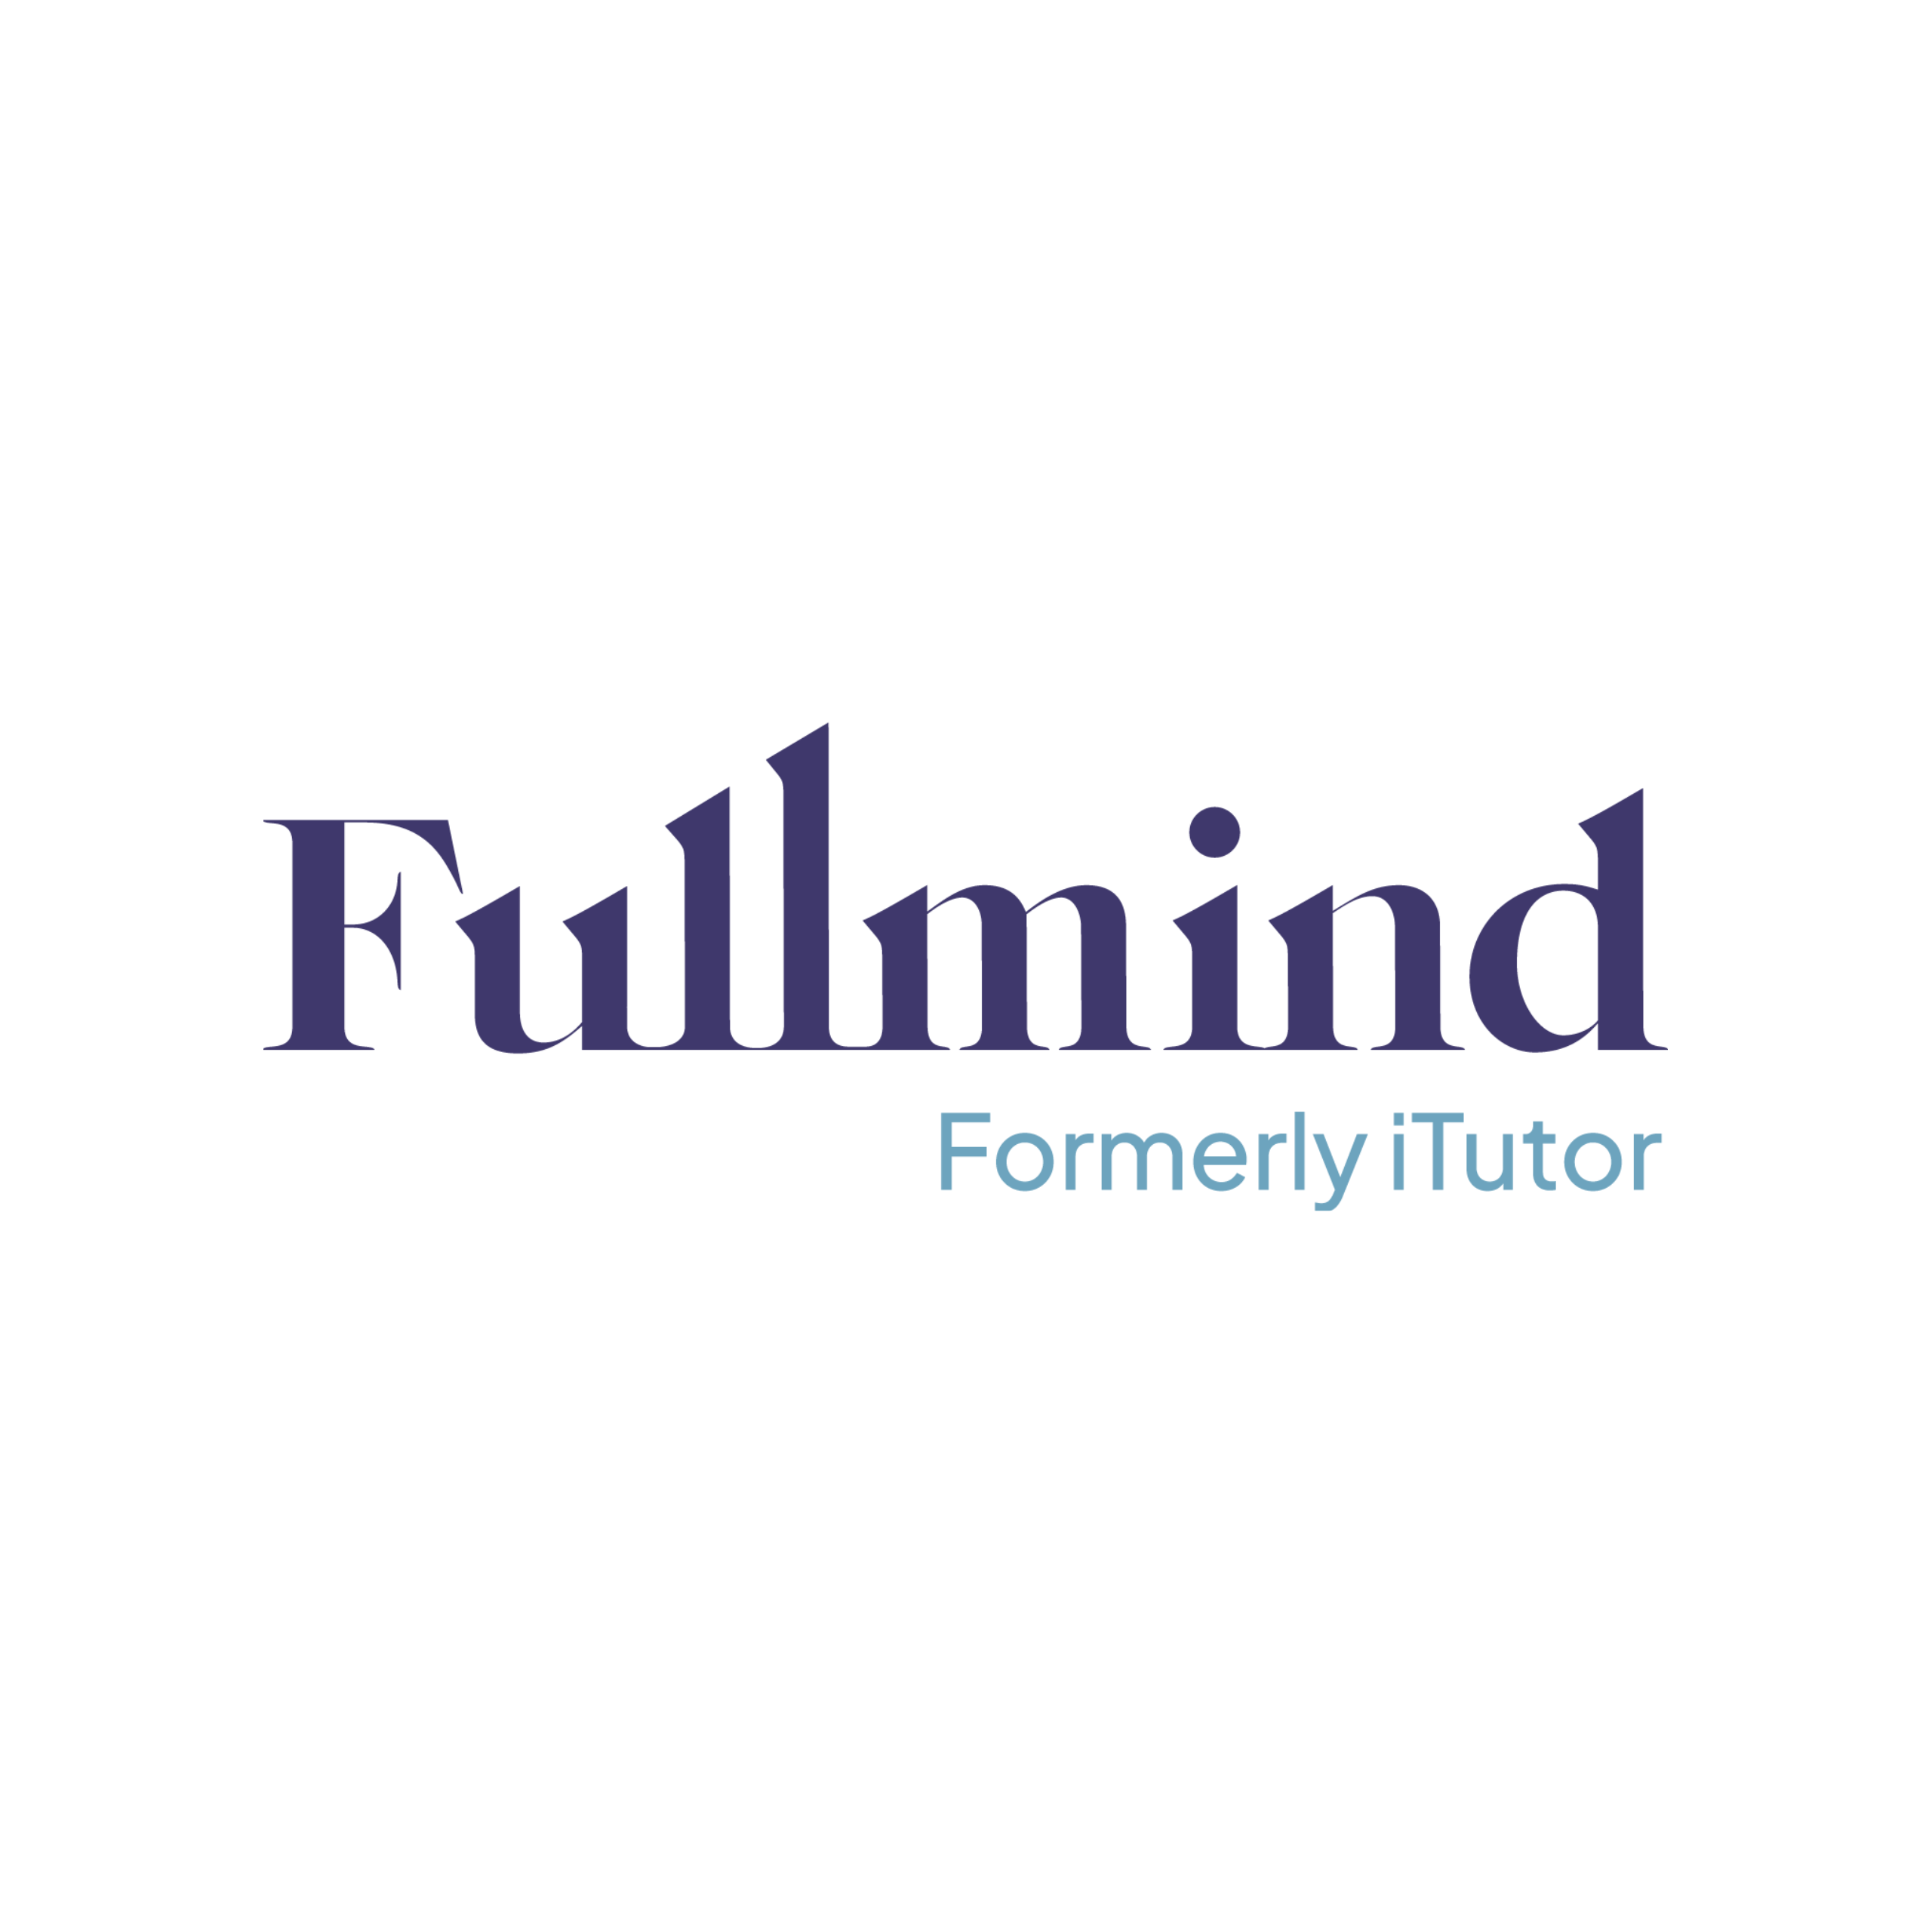 Fullmind logo